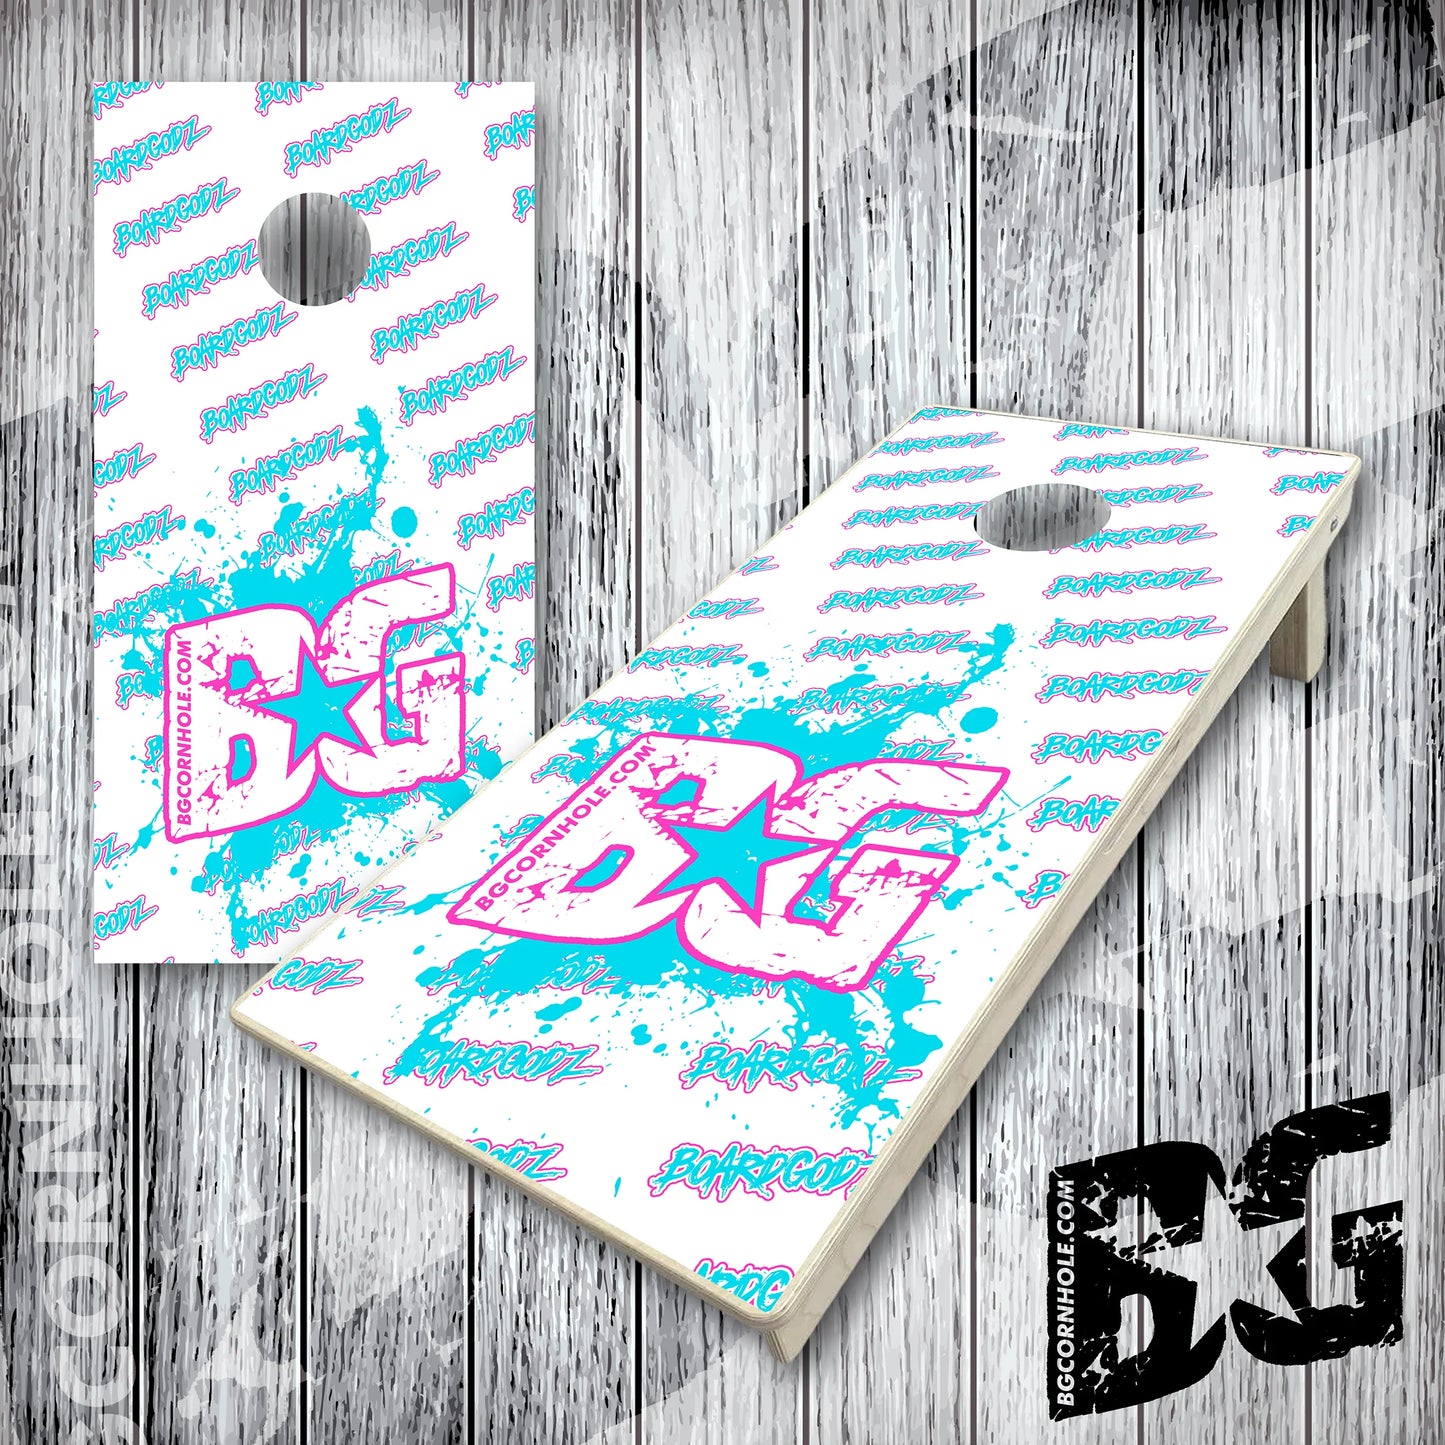 BG Cornhole Boards - BG Teal and Pink